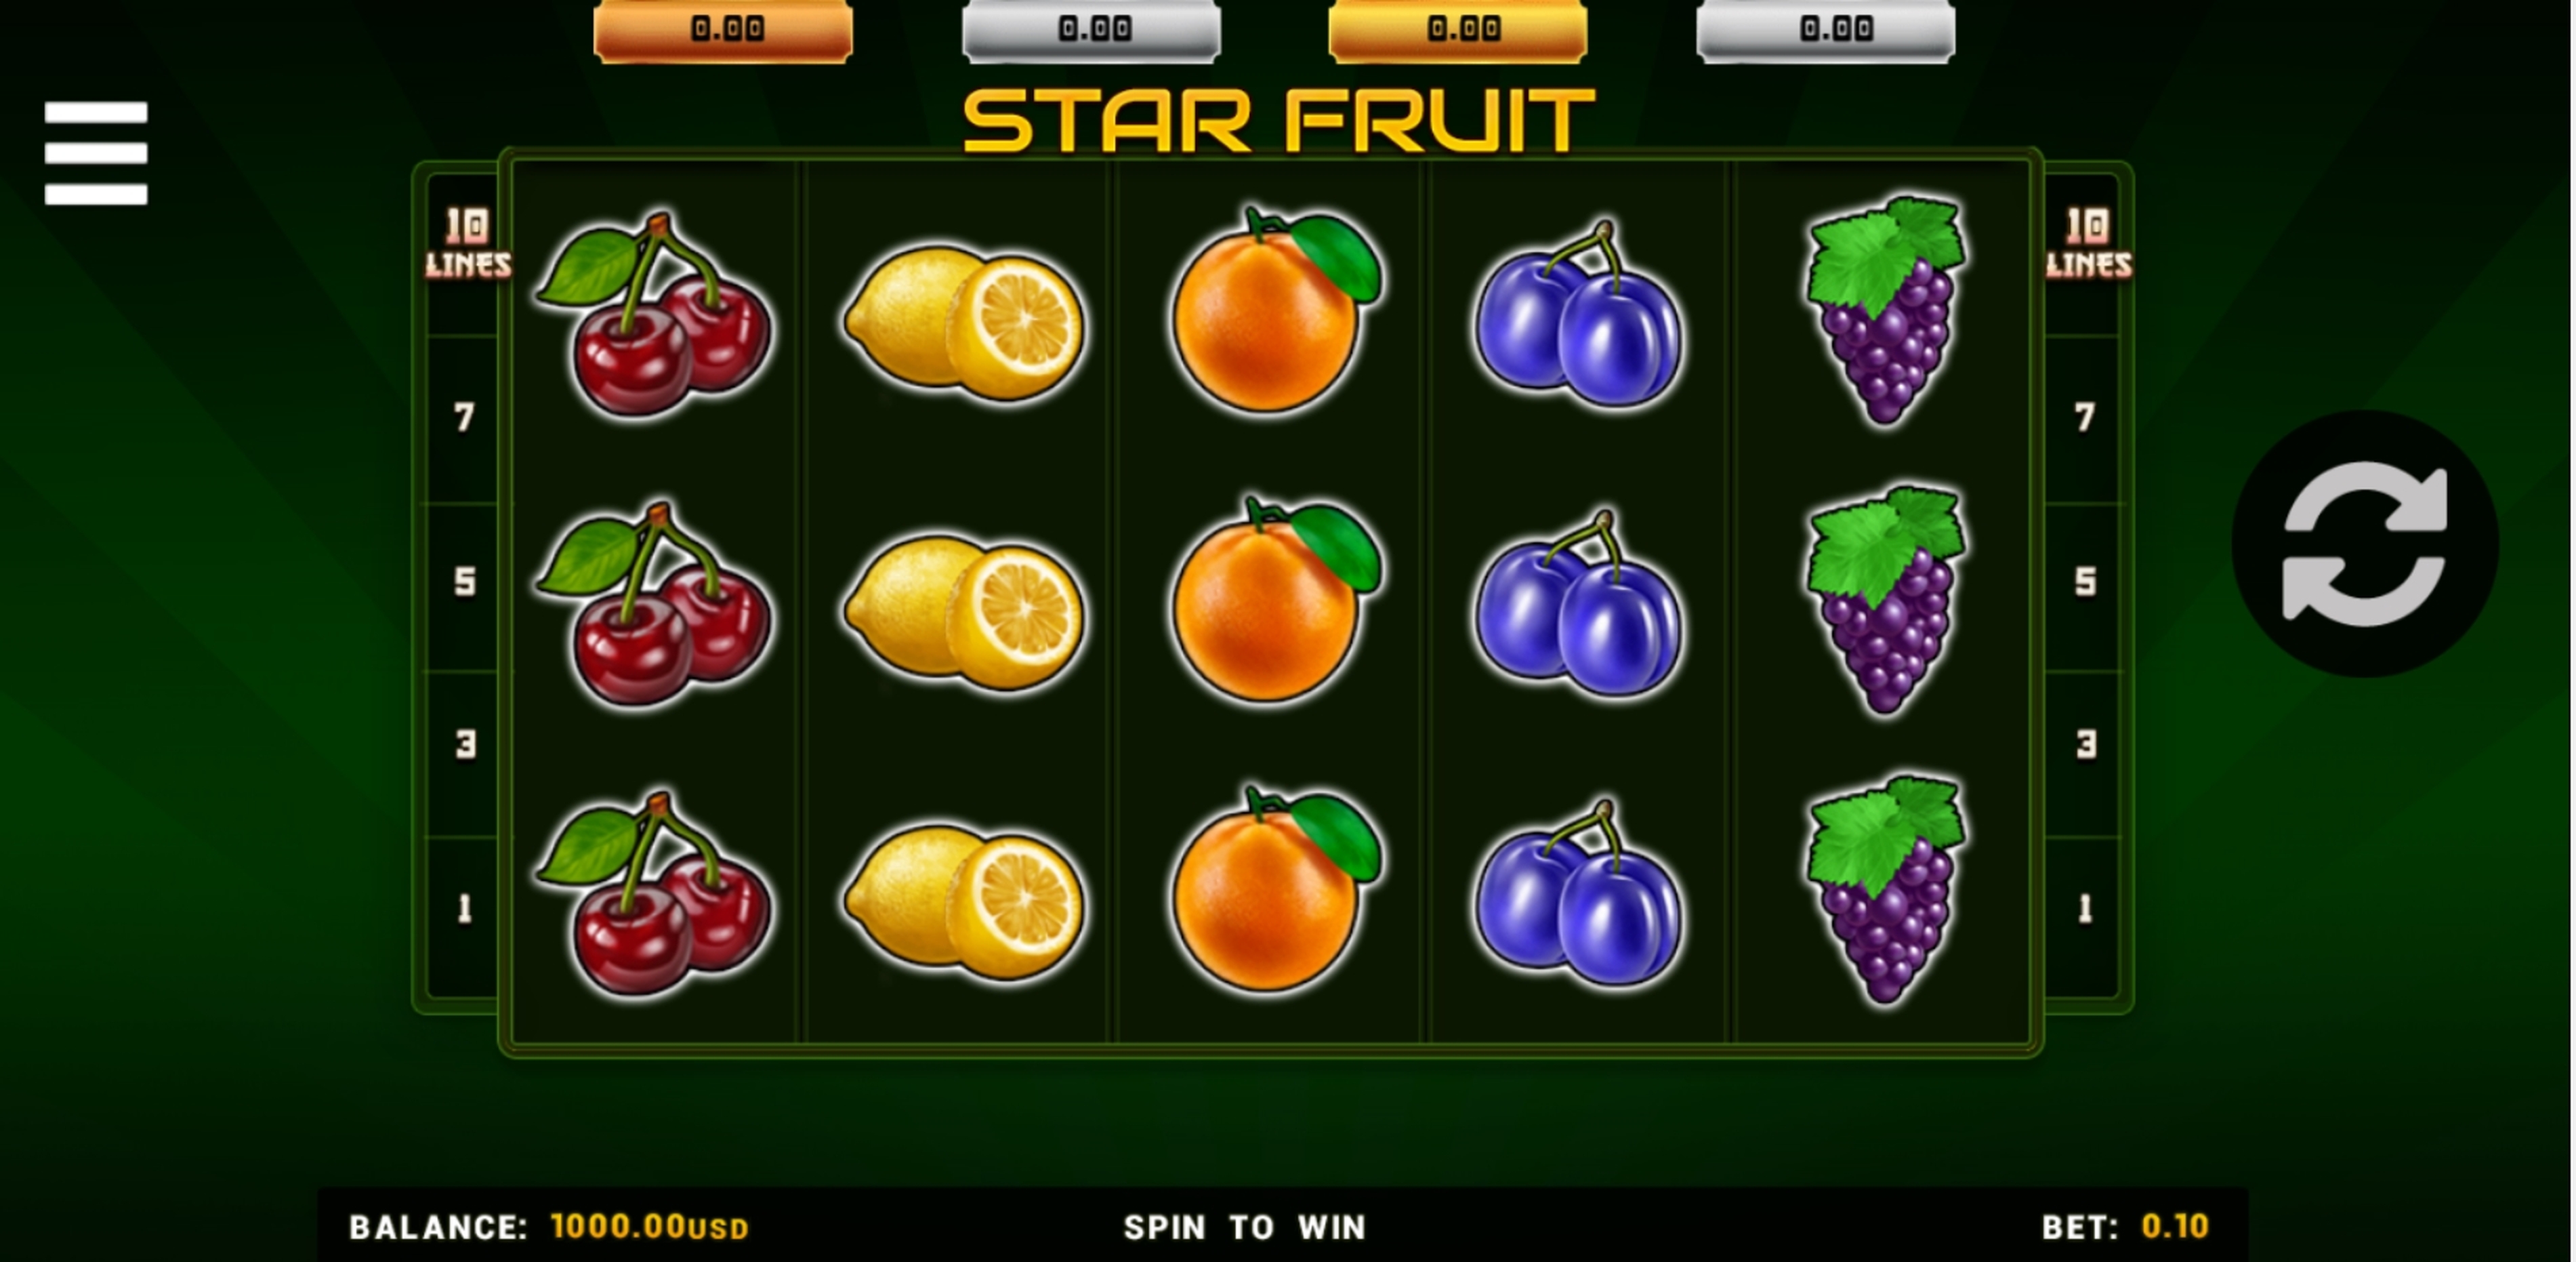 Star Fruit demo